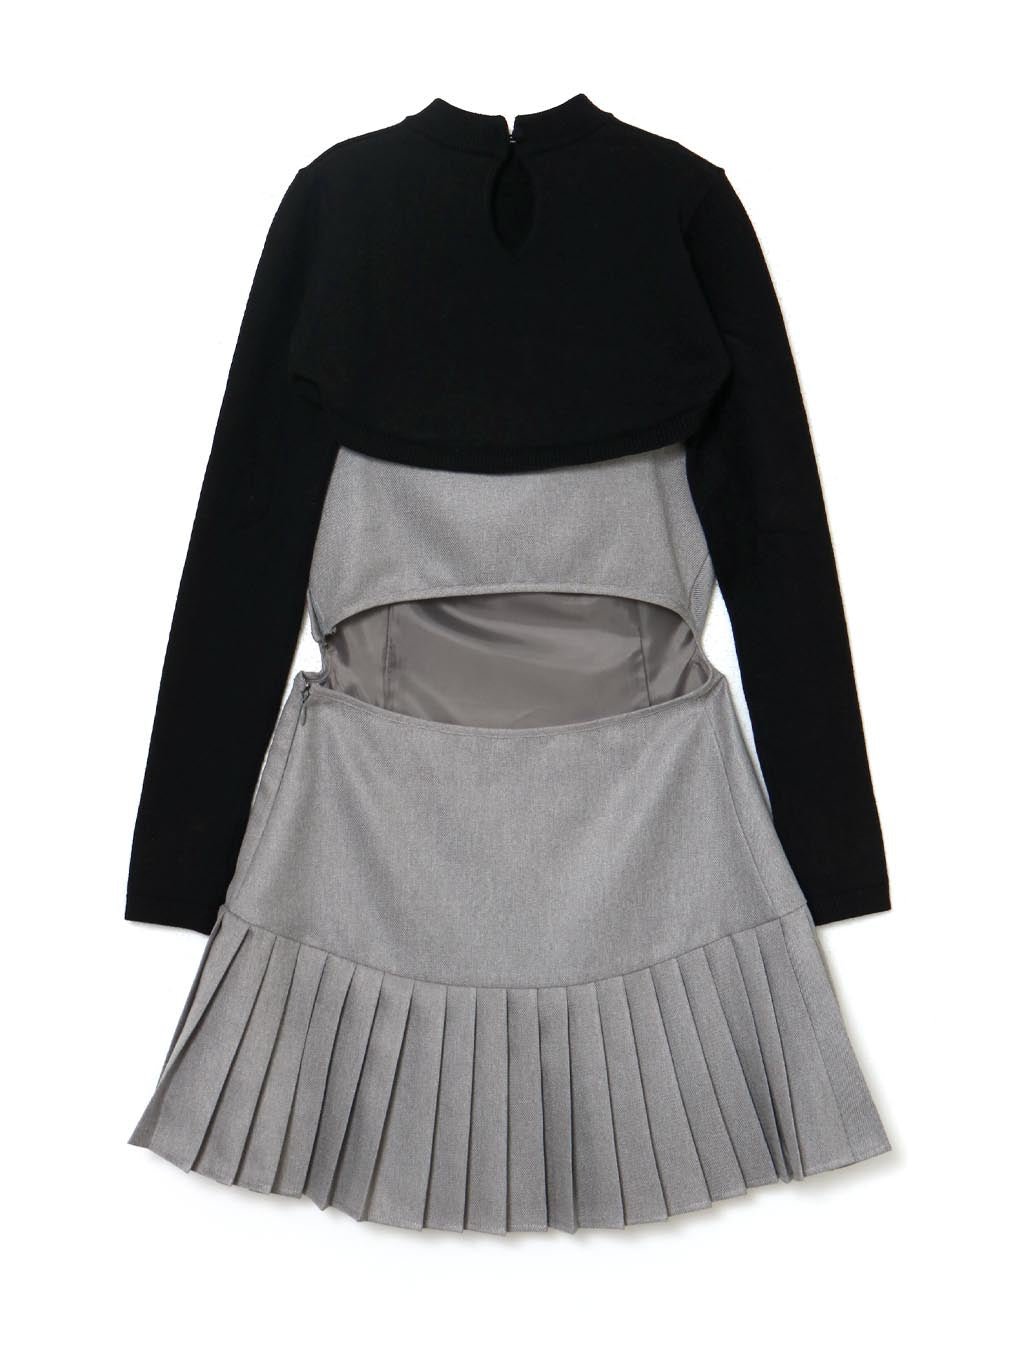 ANDMARY】Karen knit set mini dress